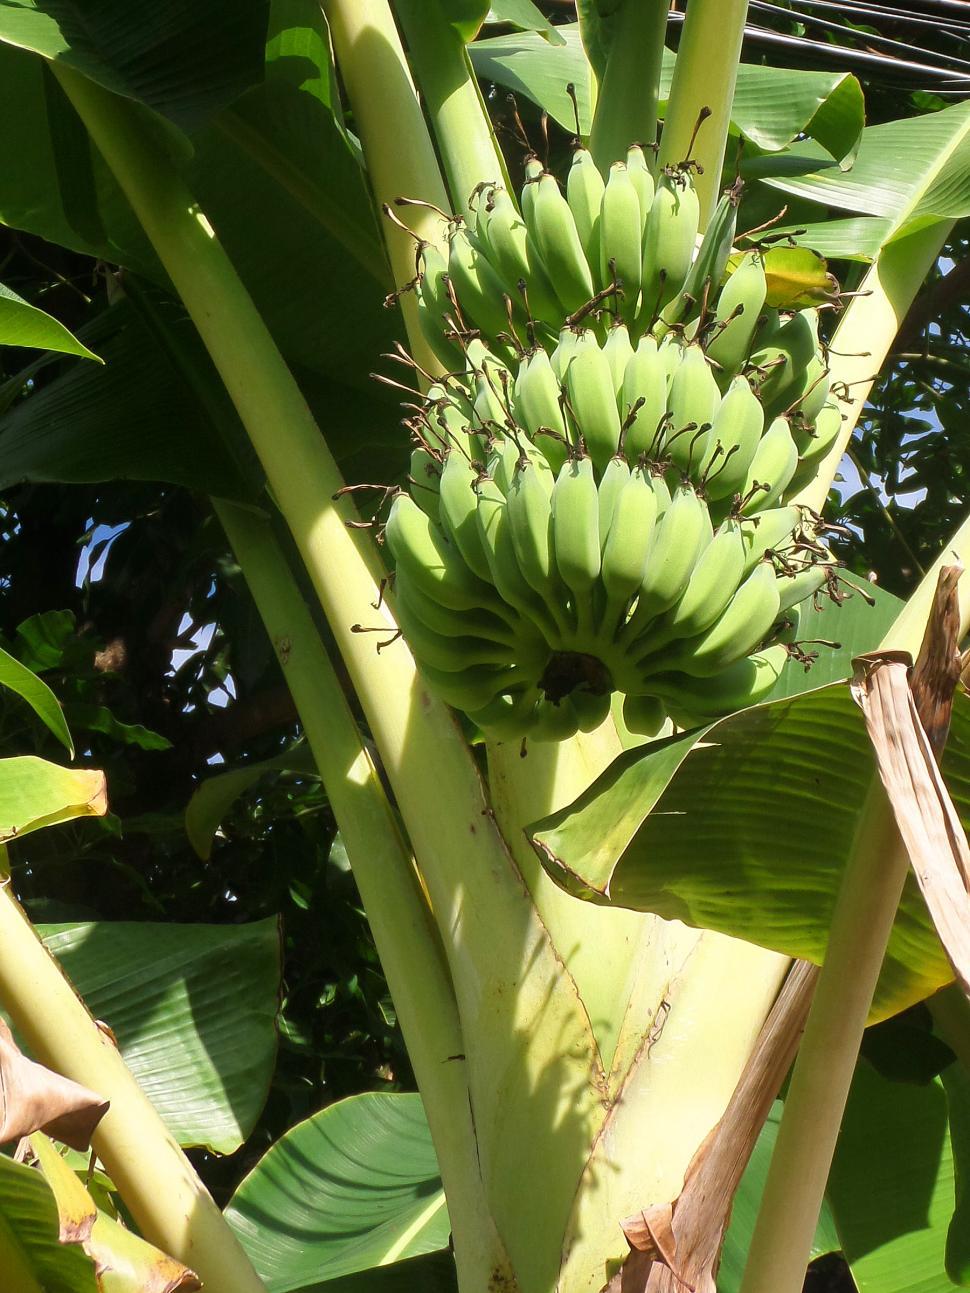 Free Image of Bananas growing on plant  